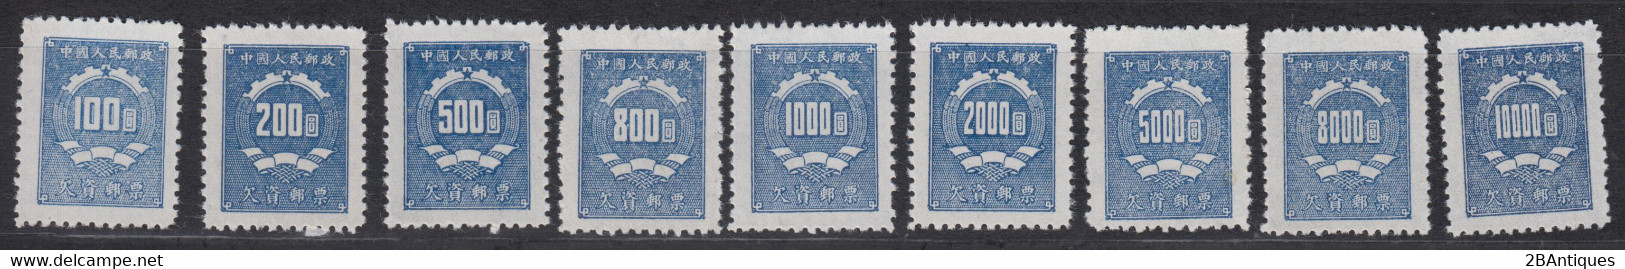 PR China 1950 - Postage Due Stamps COMPLETE SET MNH** XF - Strafport